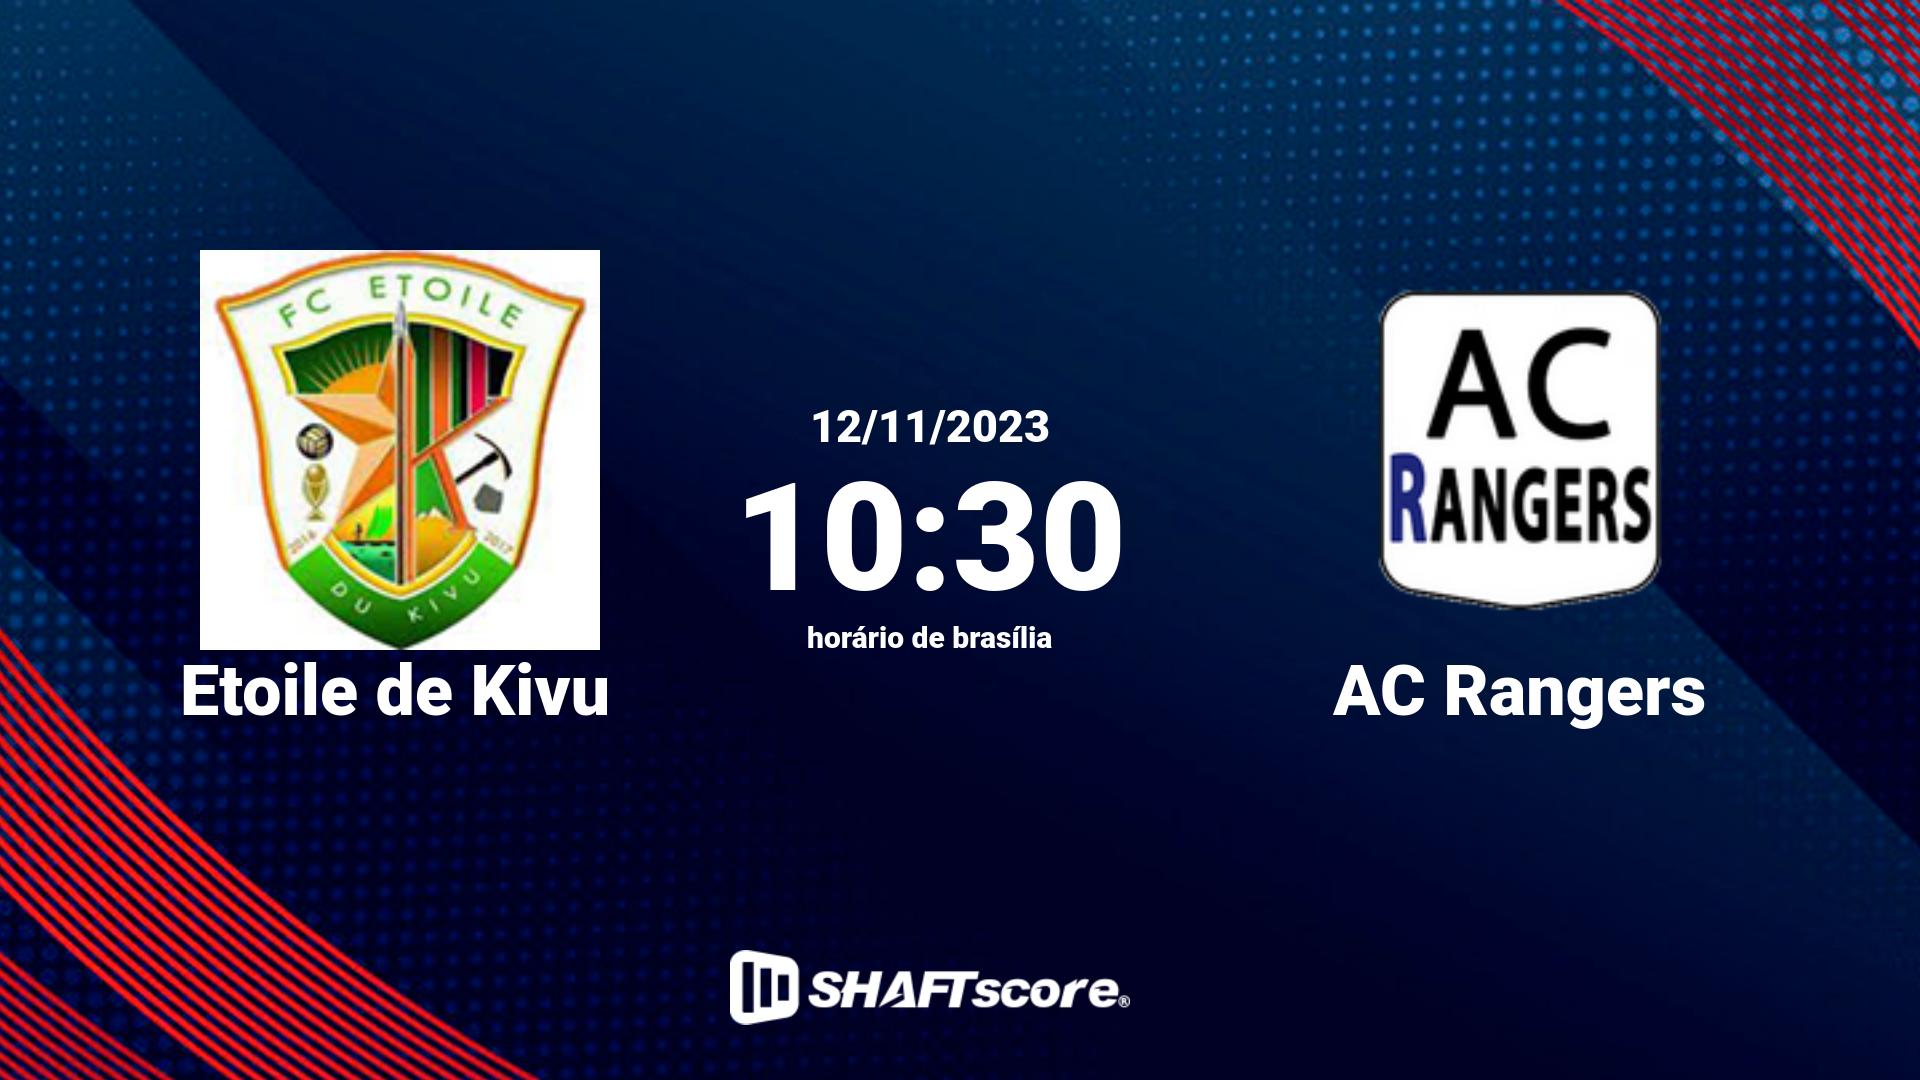 Estatísticas do jogo Etoile de Kivu vs AC Rangers 12.11 10:30